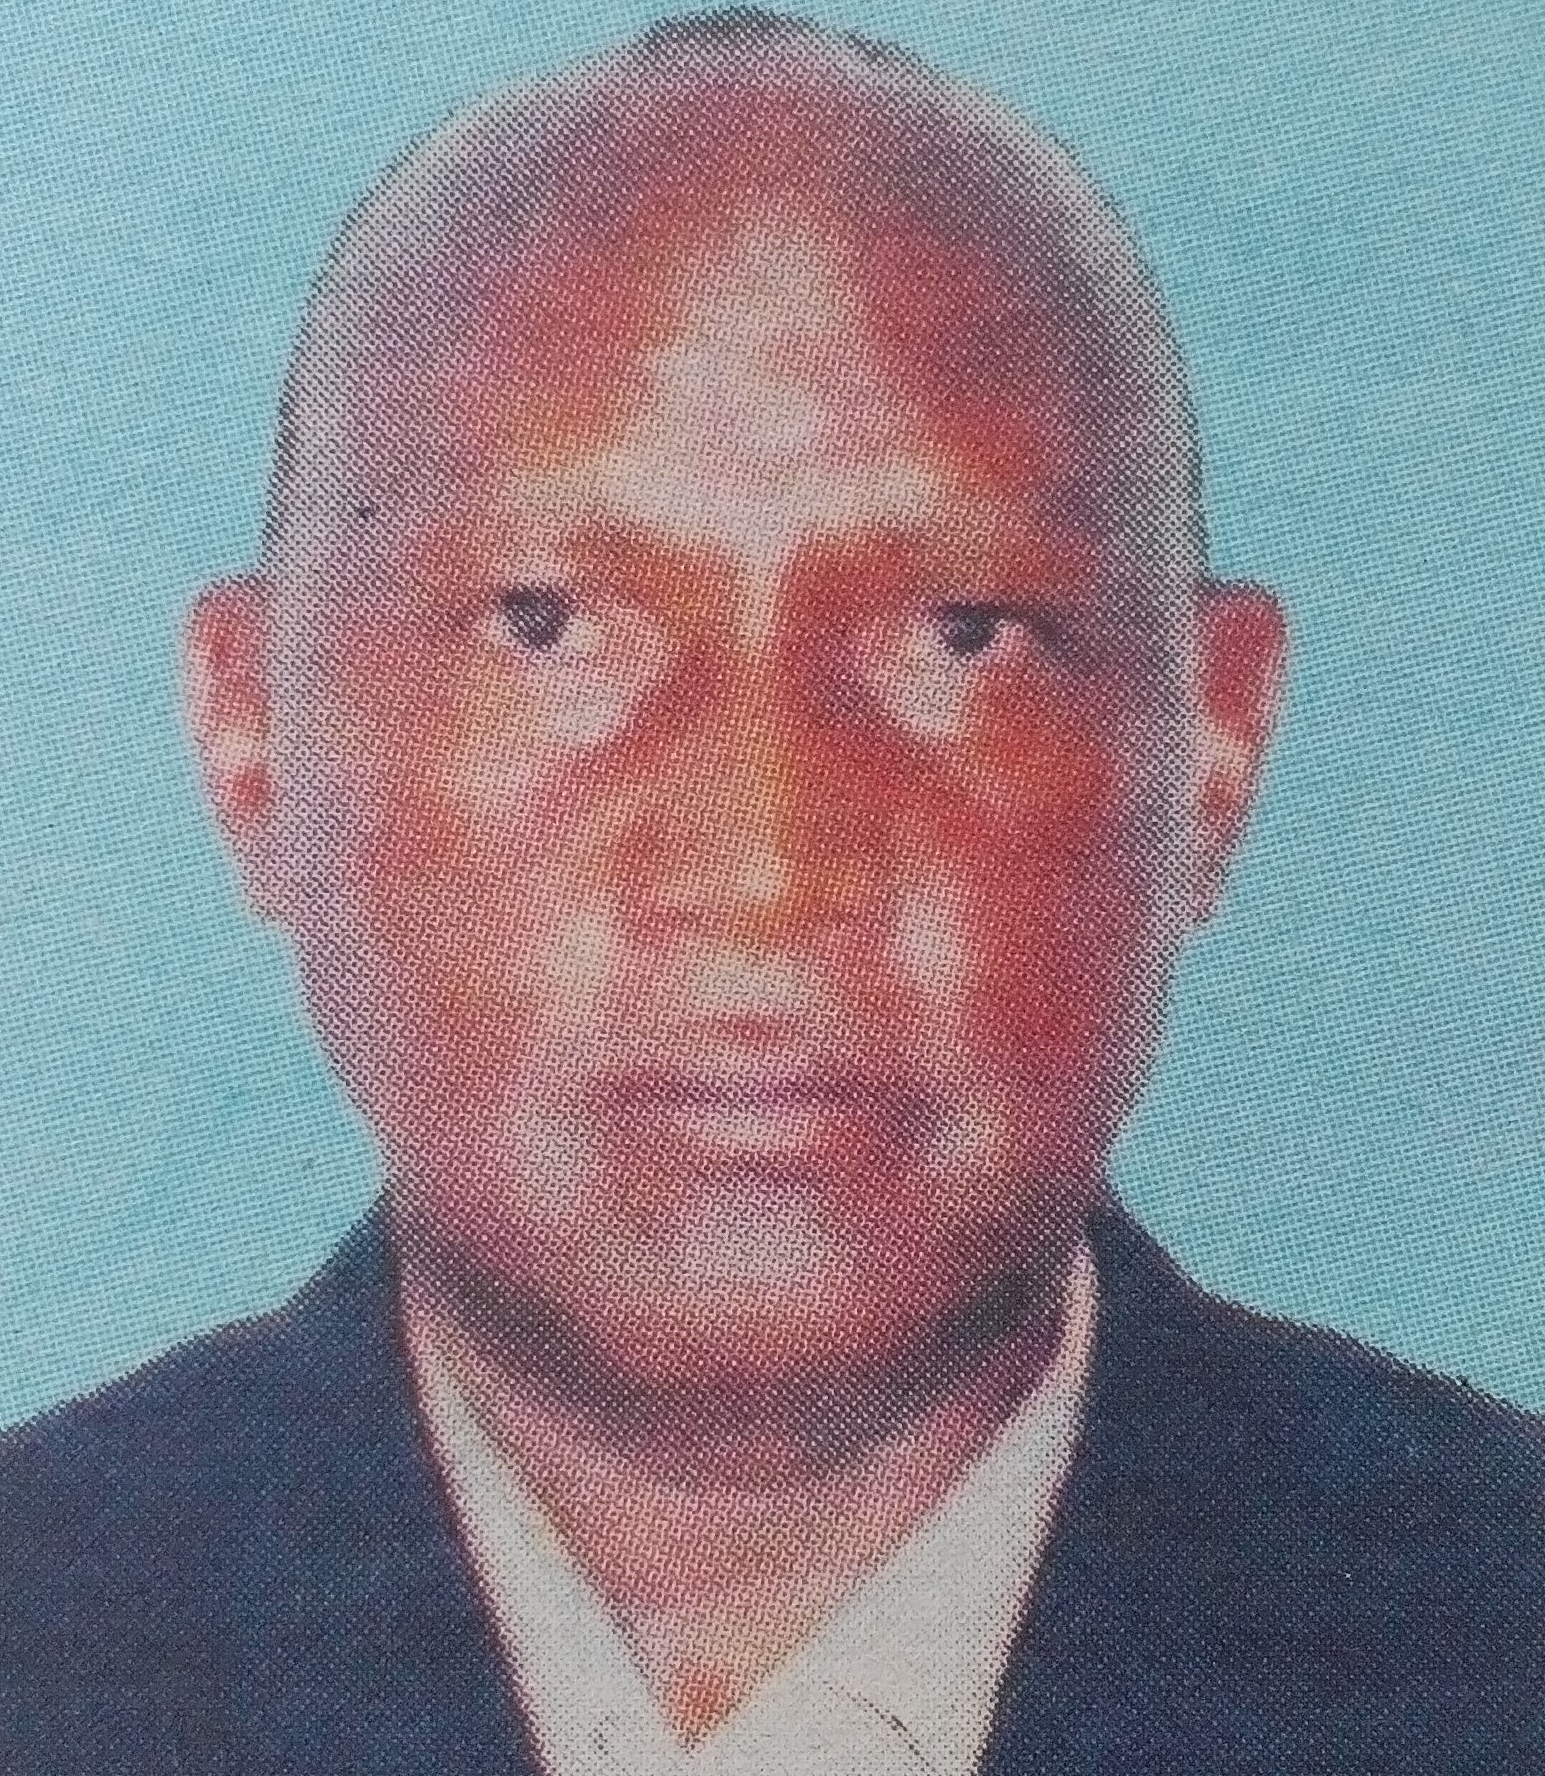 Obituary Image of David Makena Mutungi